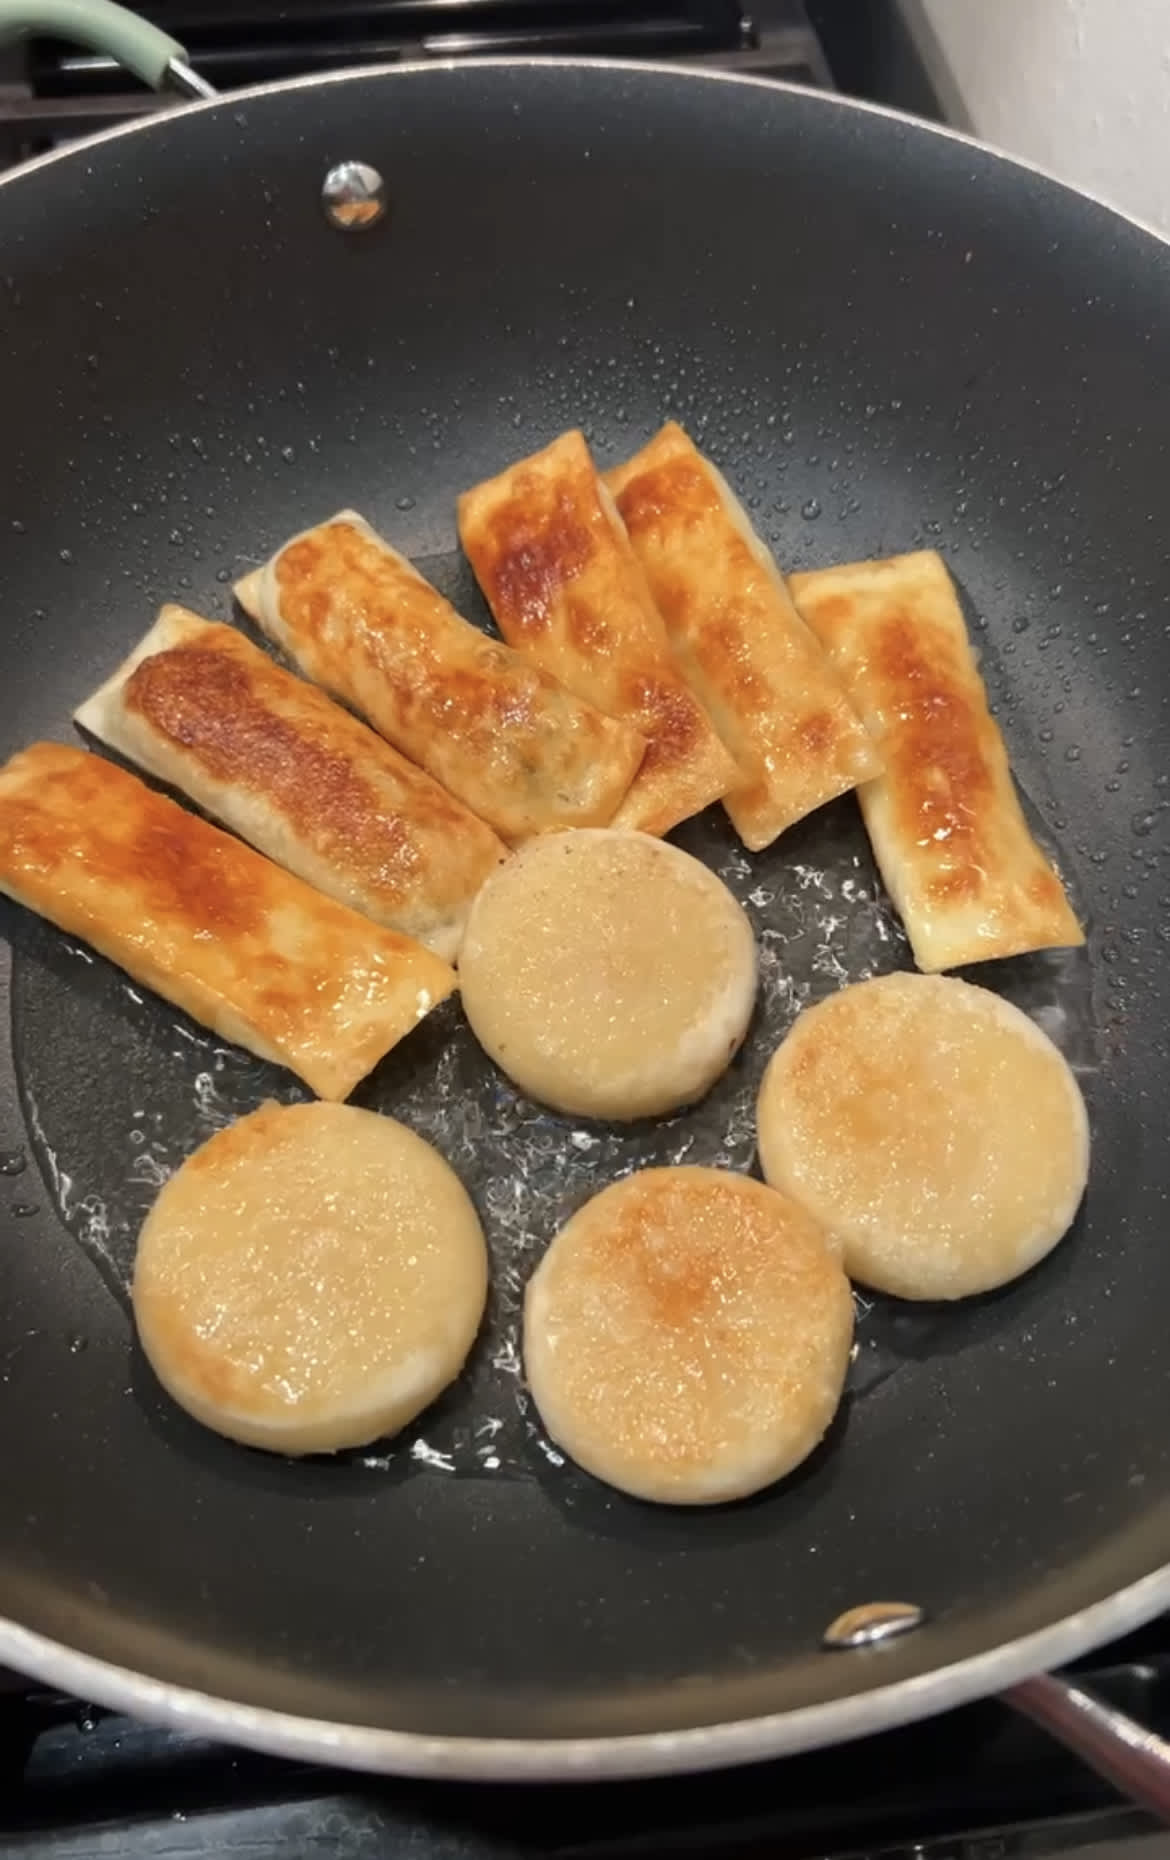 Asian American Frozen Foods: MìLà's “Soup Dumplings” found at Costco, 8Asians